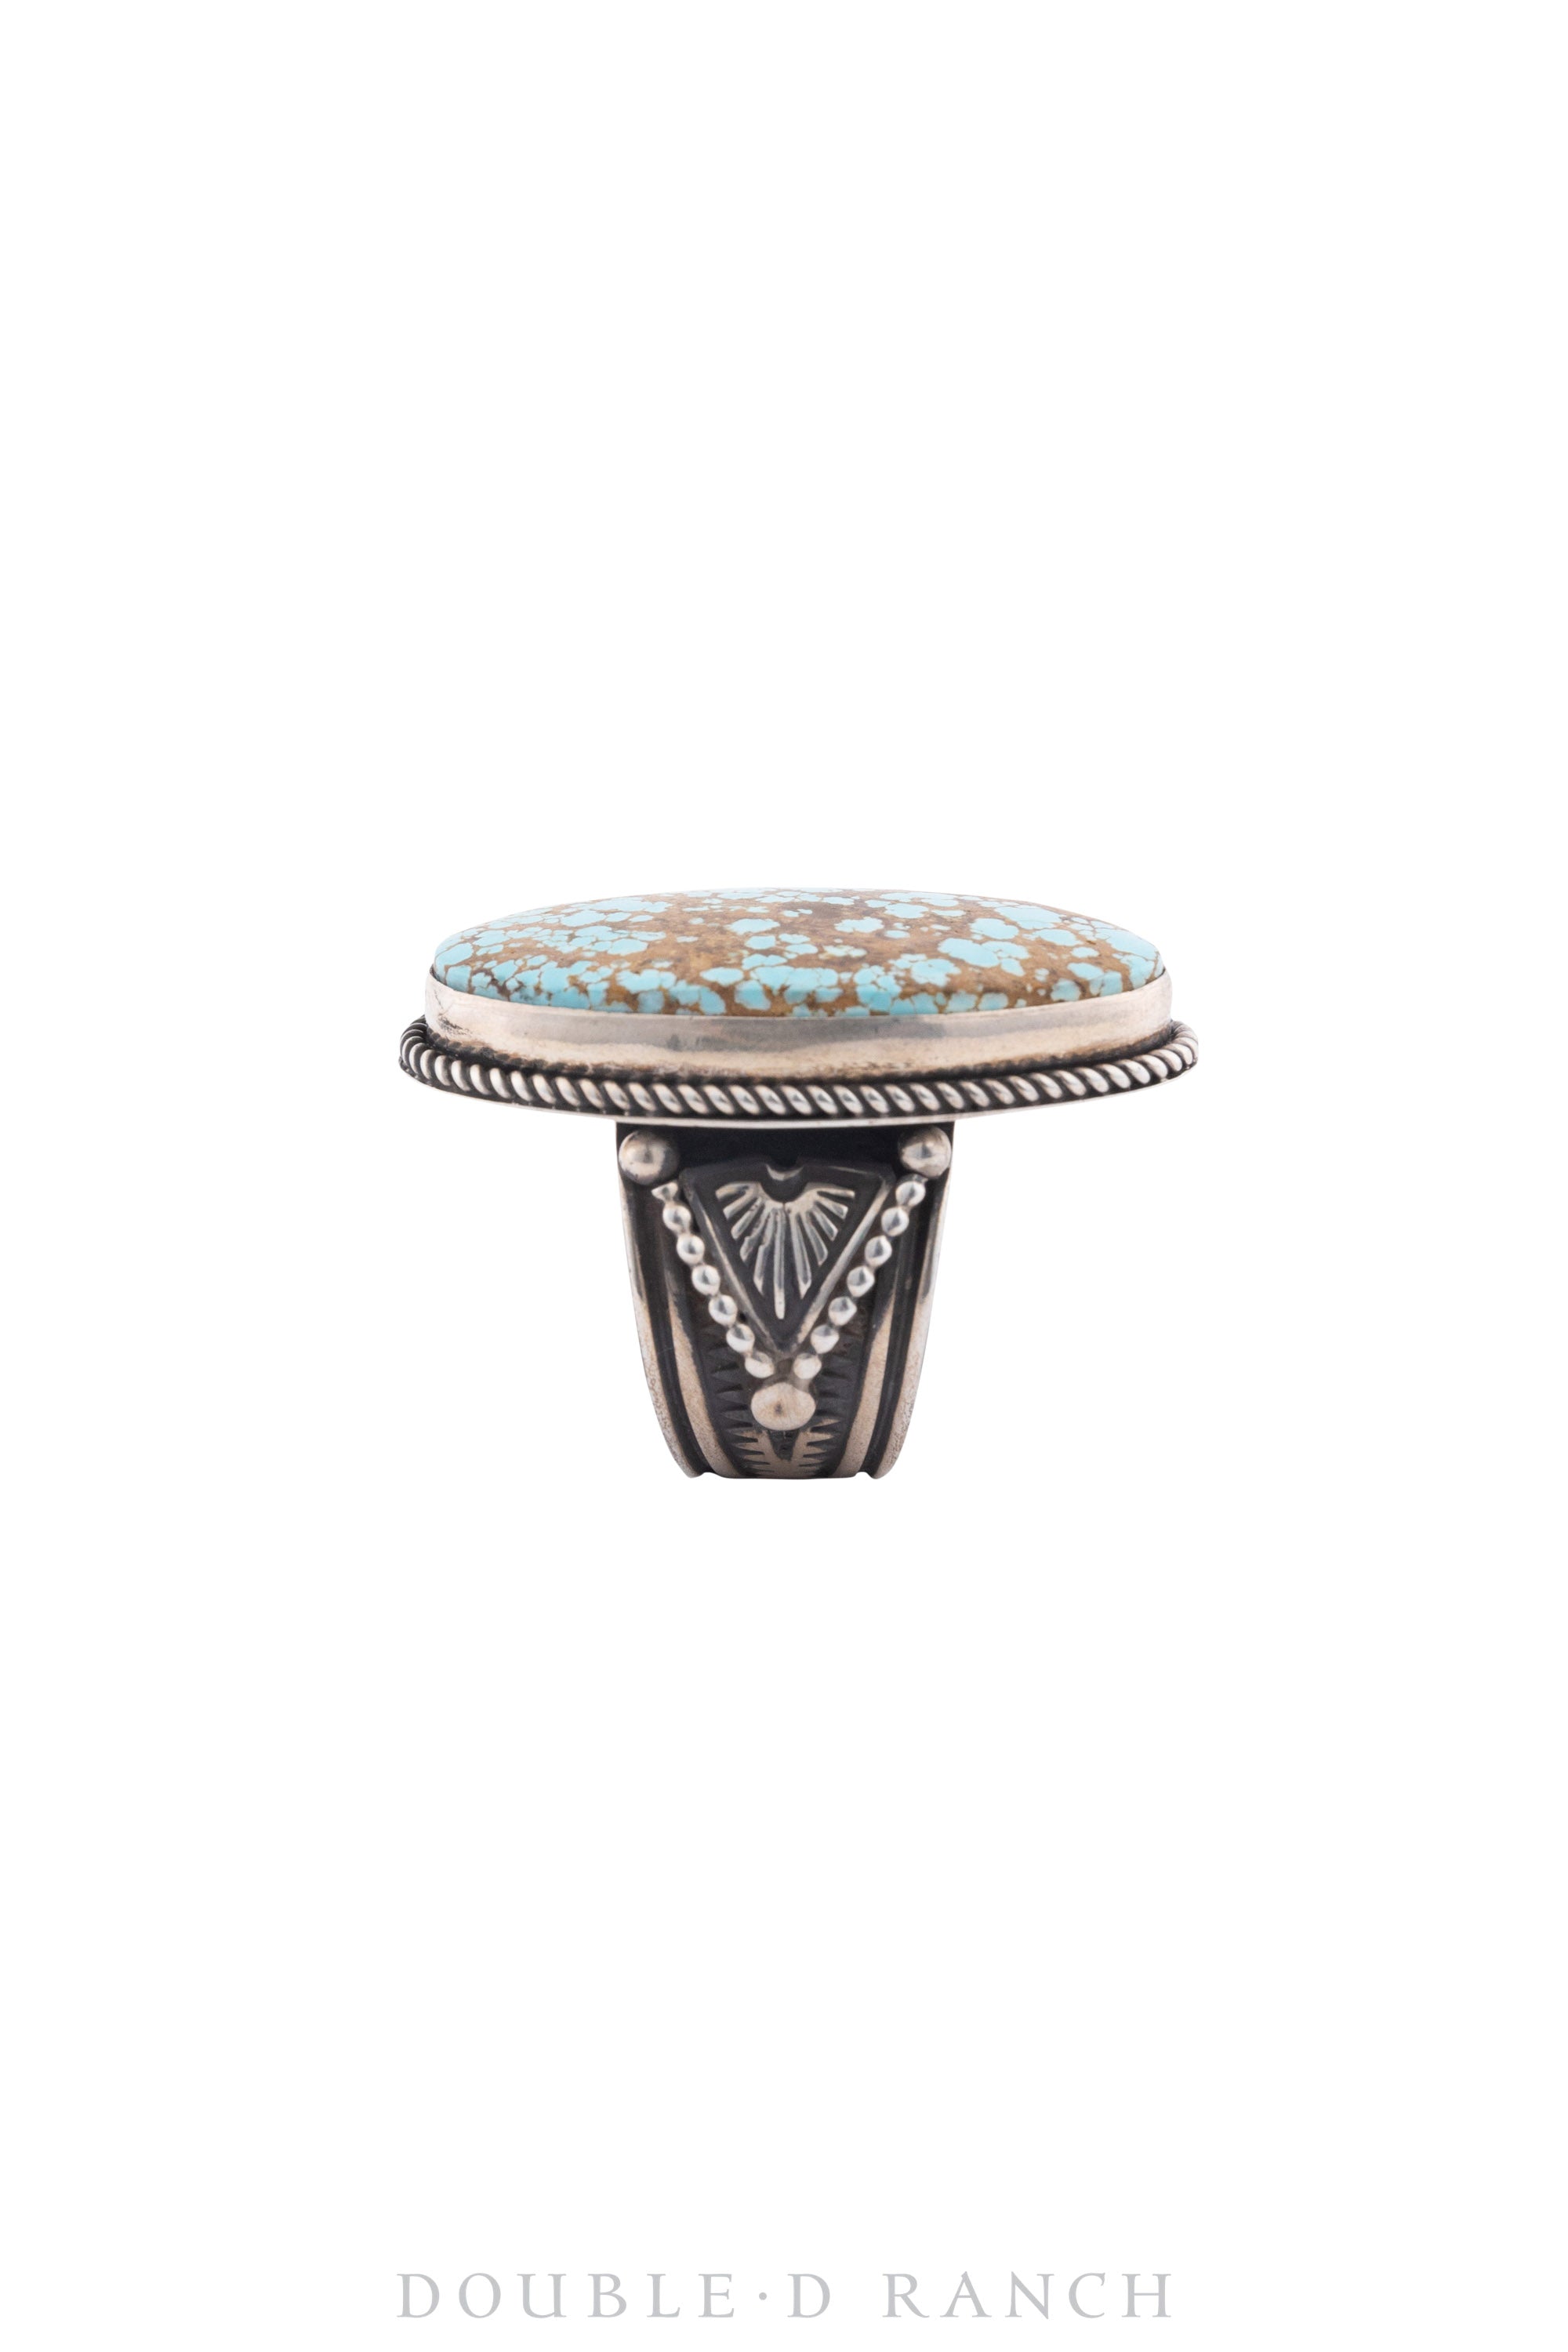 Ring, Natural Stone, Turquoise, Hallmark, Vintage, 1340